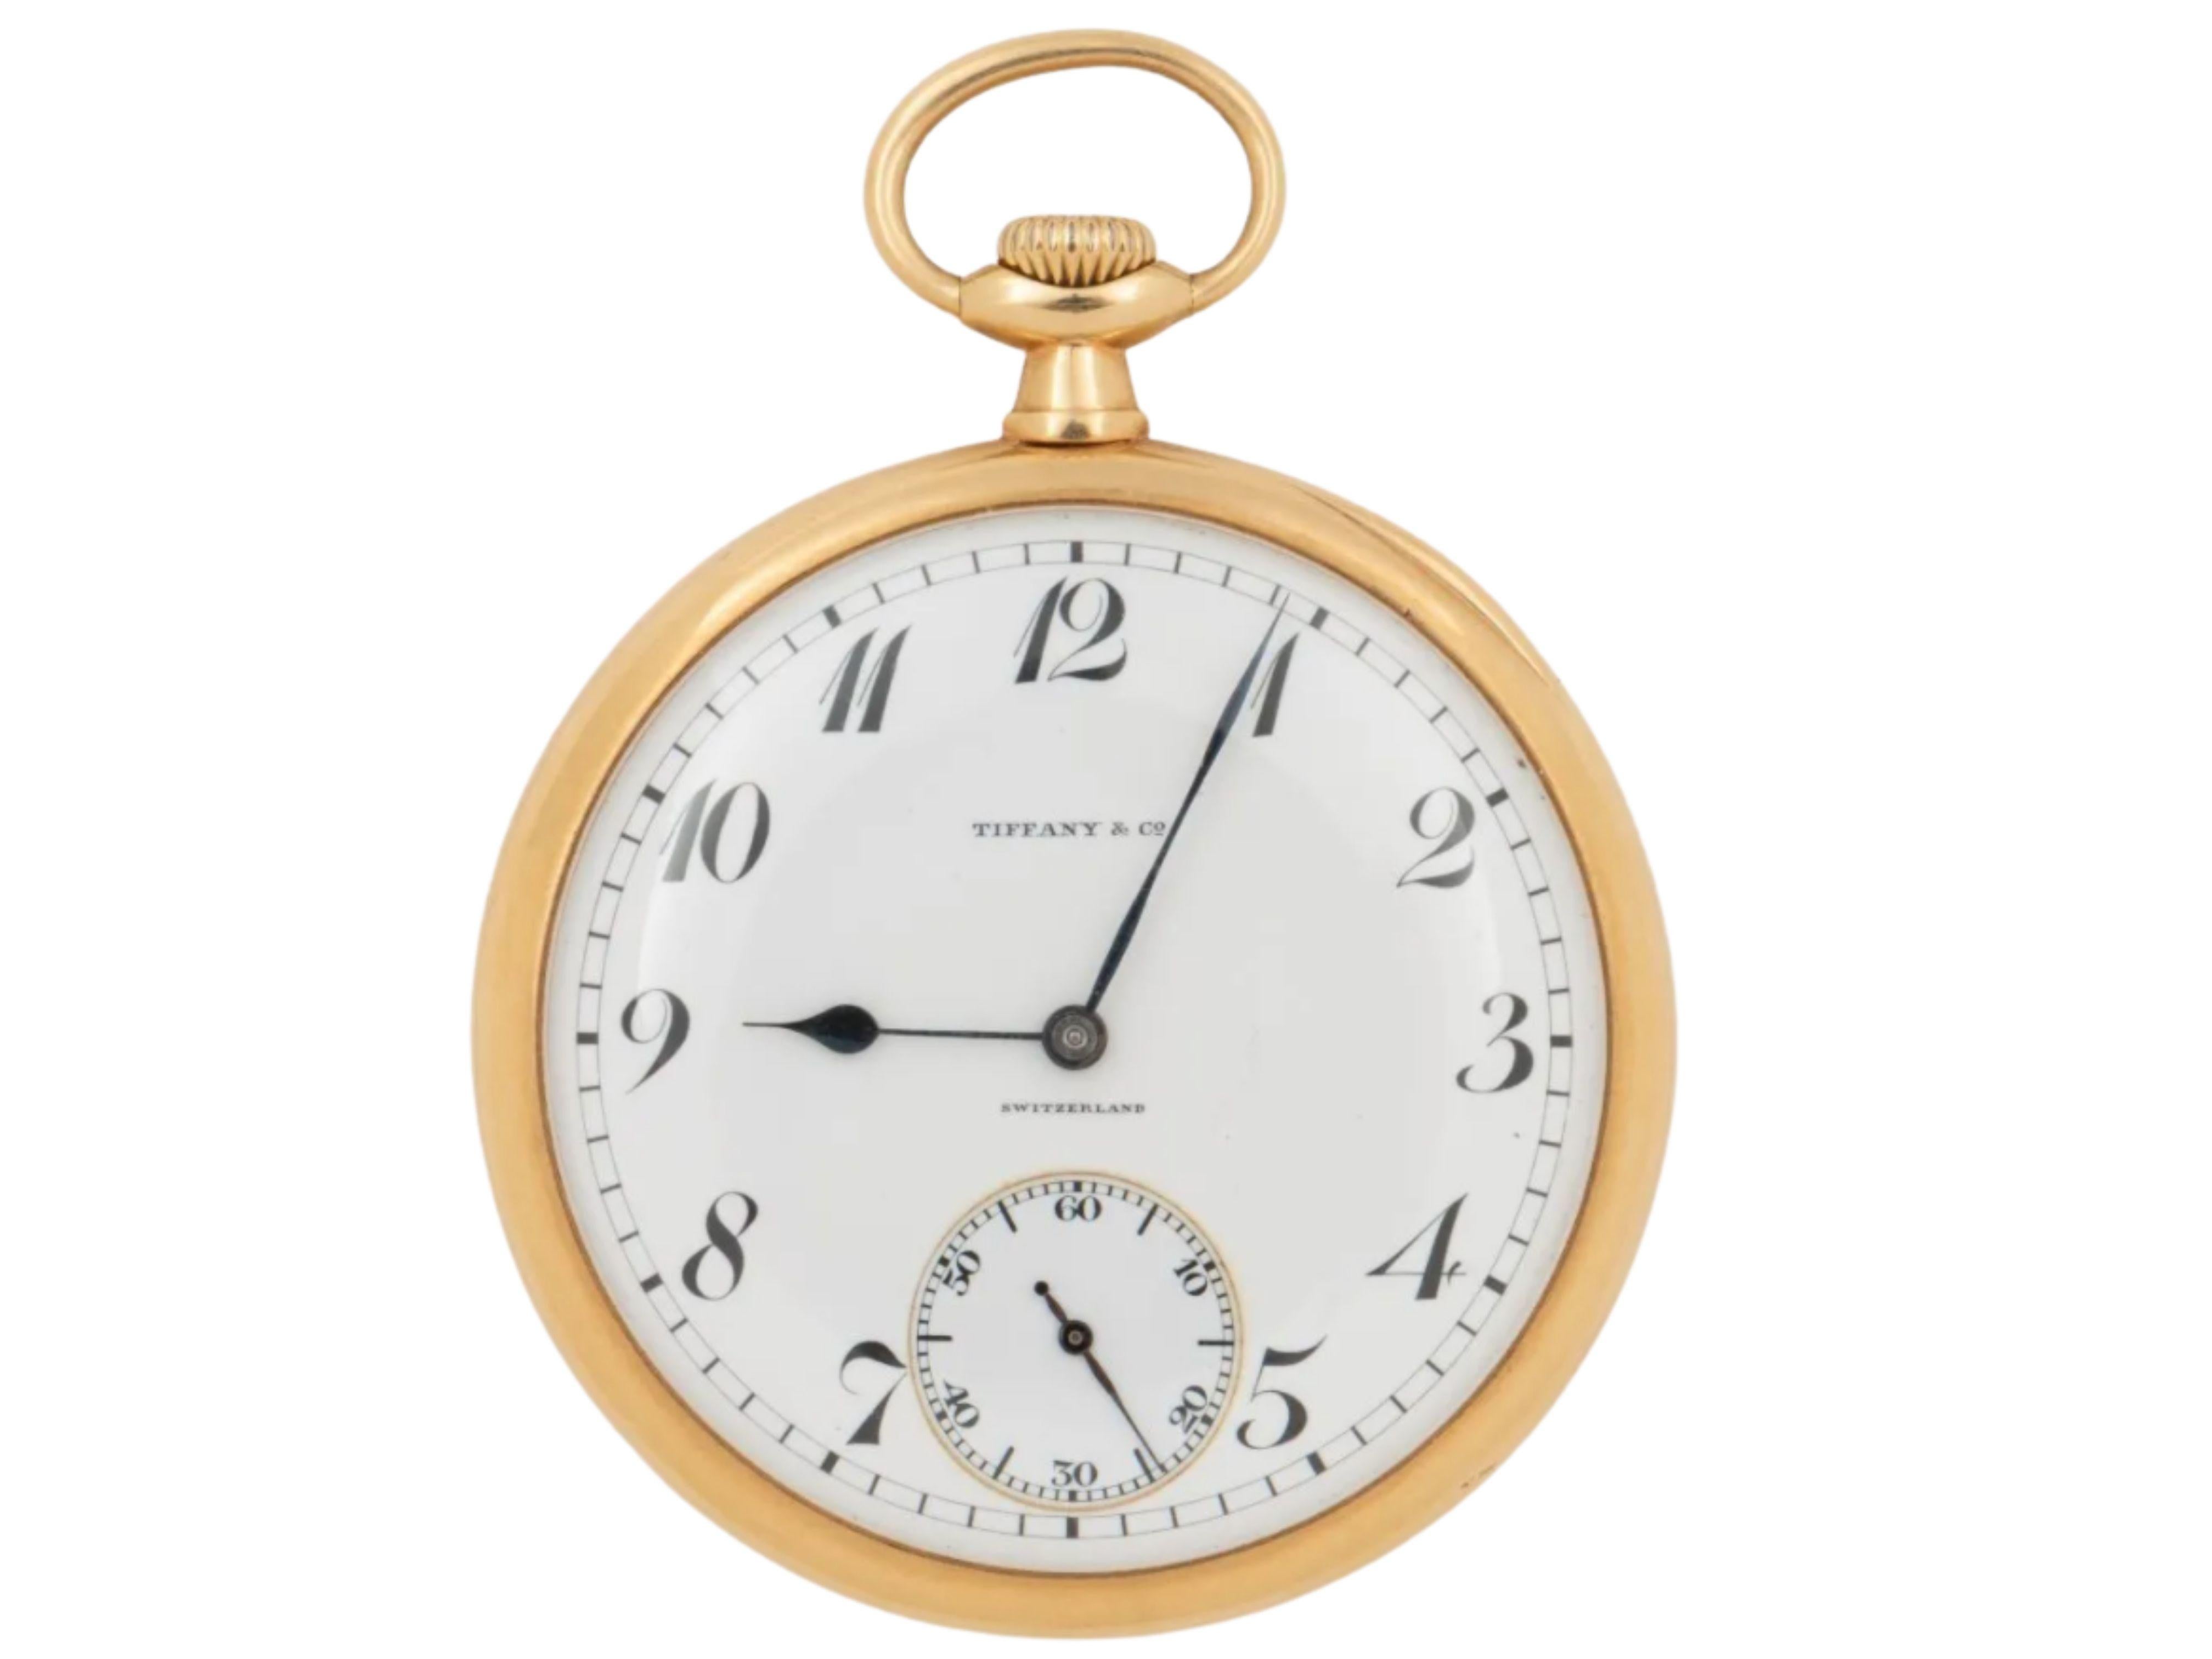 Patek Phillipe & Co, Switzerland open face 18 jewels pocket watch. Retailed by Tiffany & Co.

Dust cover monogrammed 